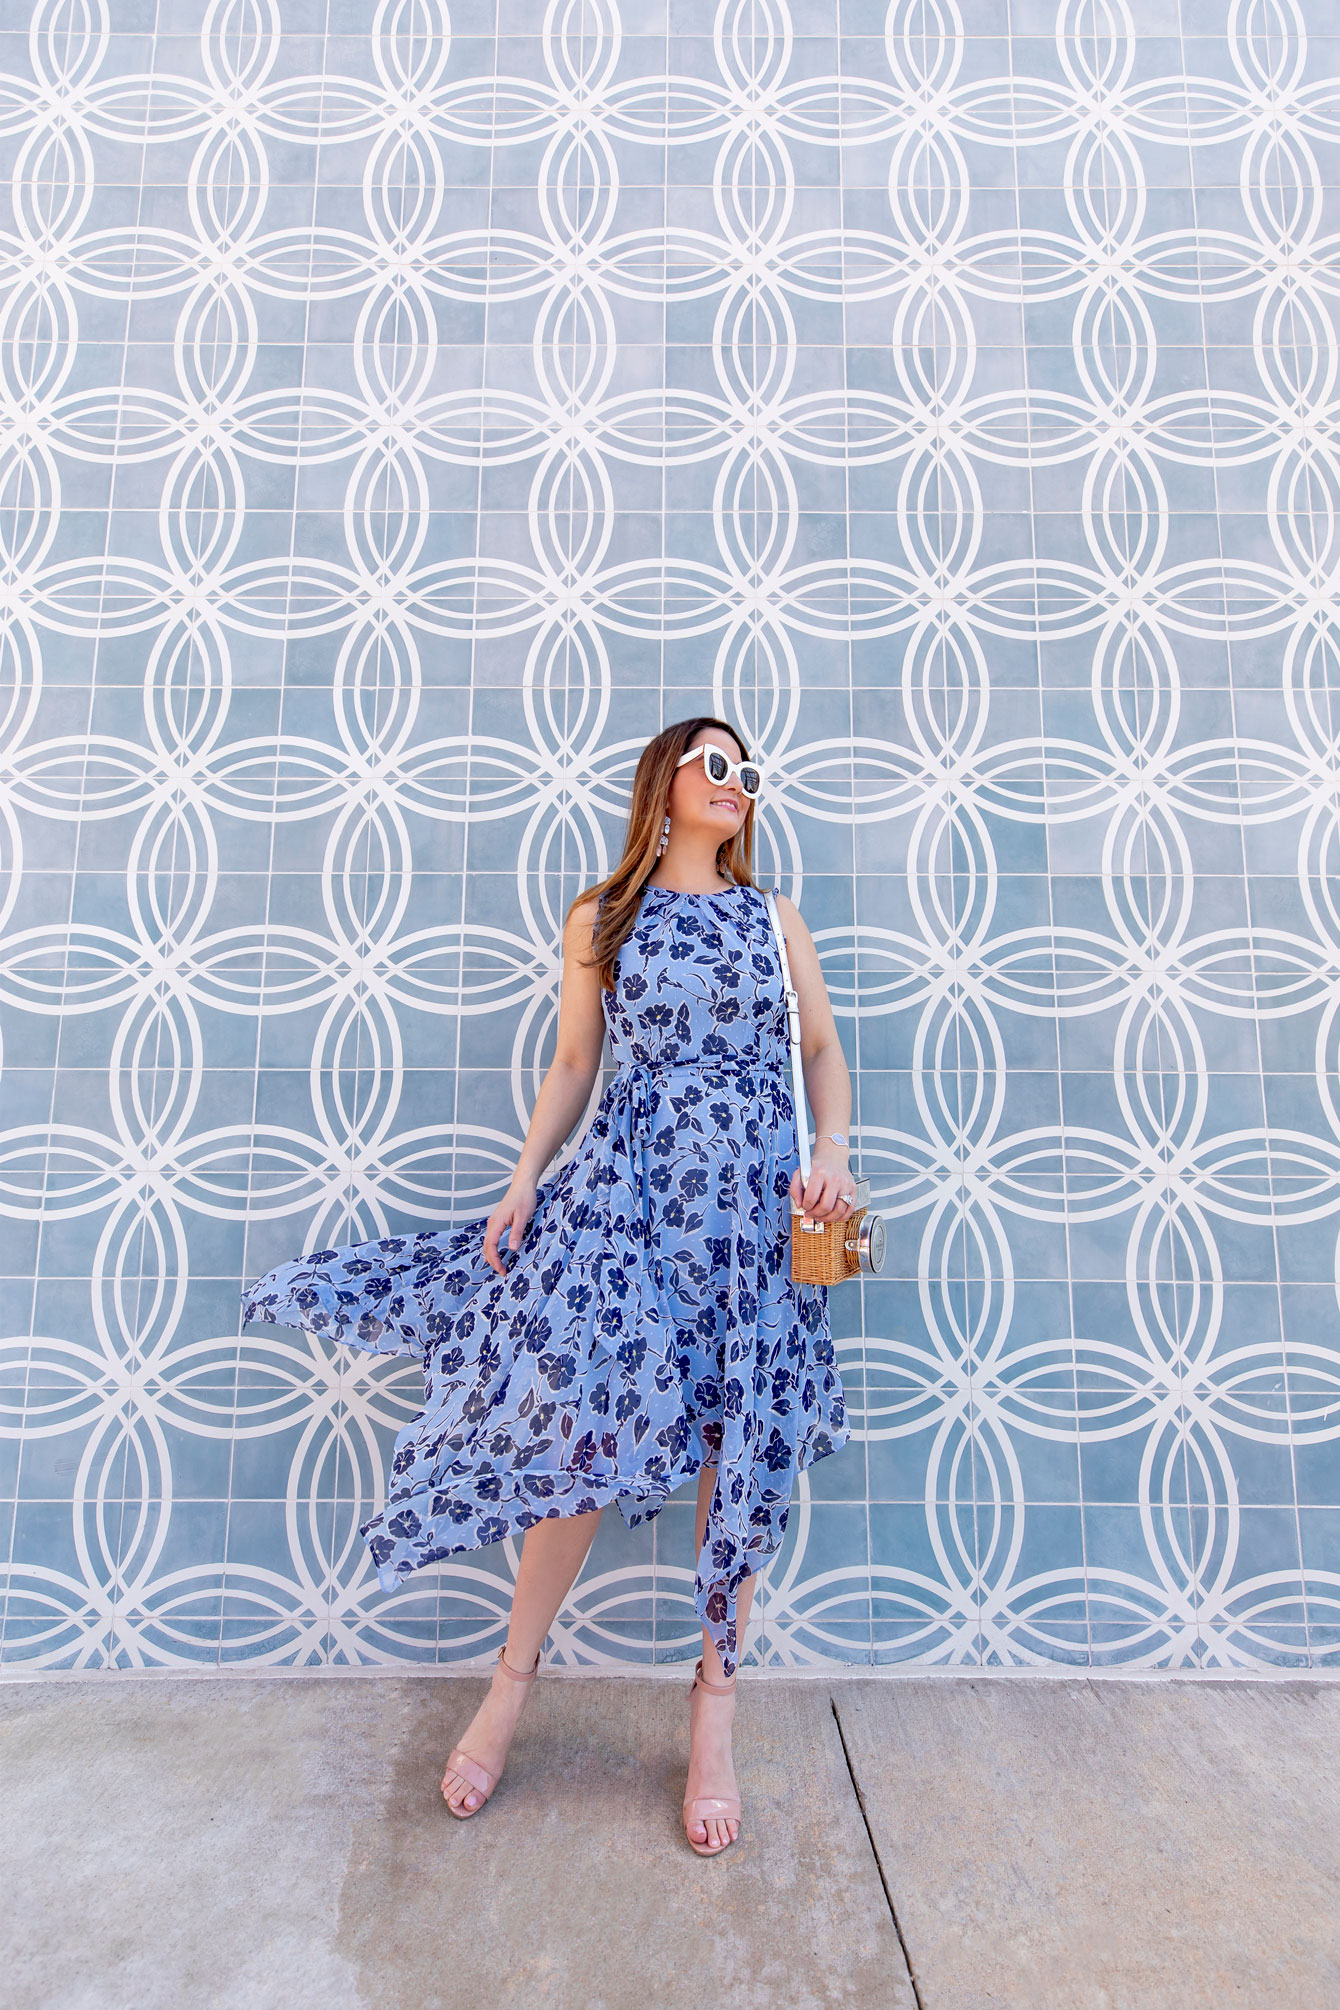 Blue Tile Wall Austin